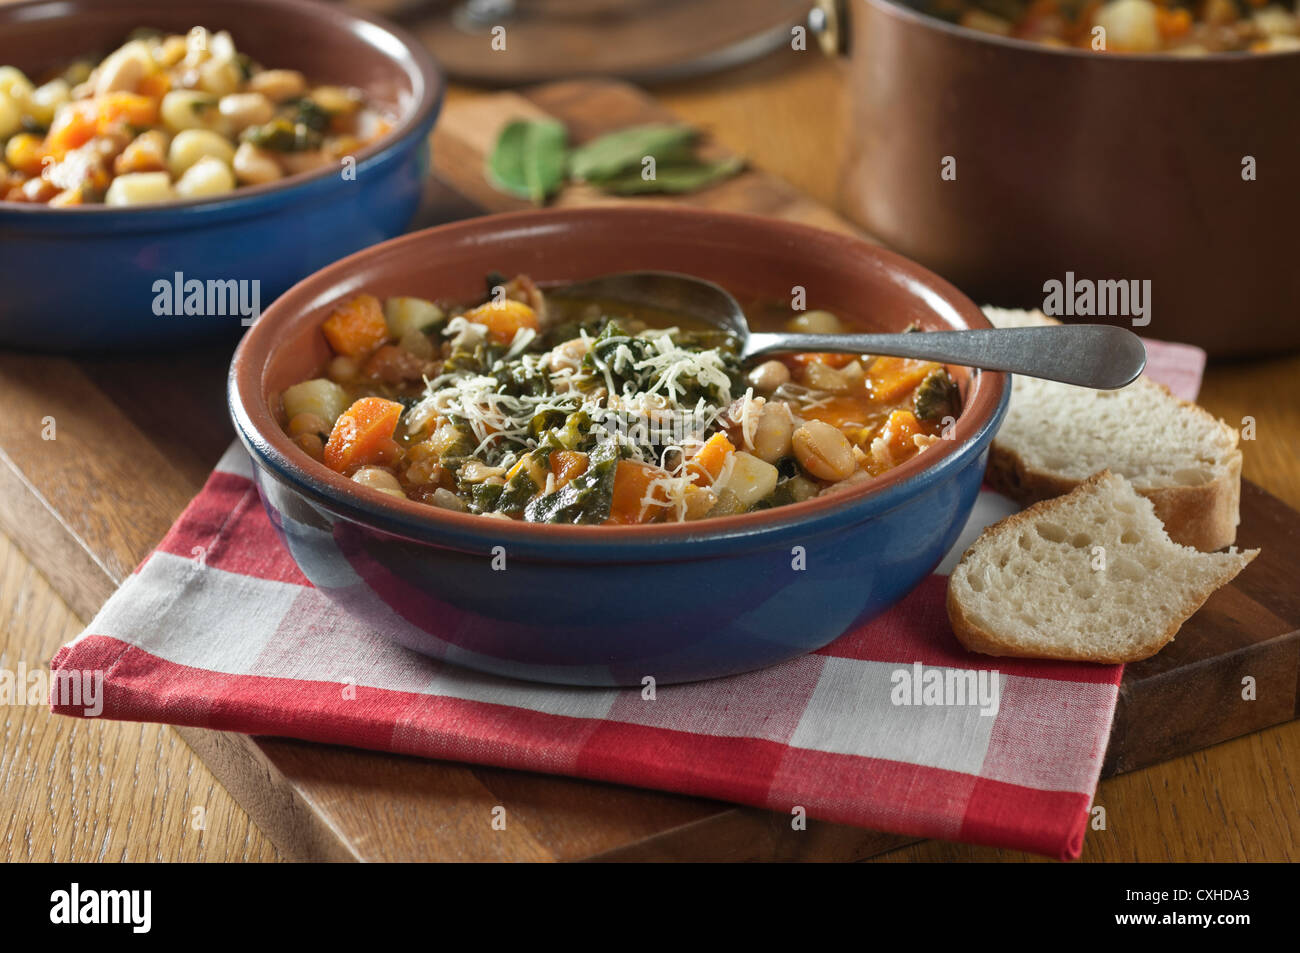 https://c8.alamy.com/comp/CXHDA3/ribollita-tuscan-bread-and-vegetable-soup-italy-food-CXHDA3.jpg